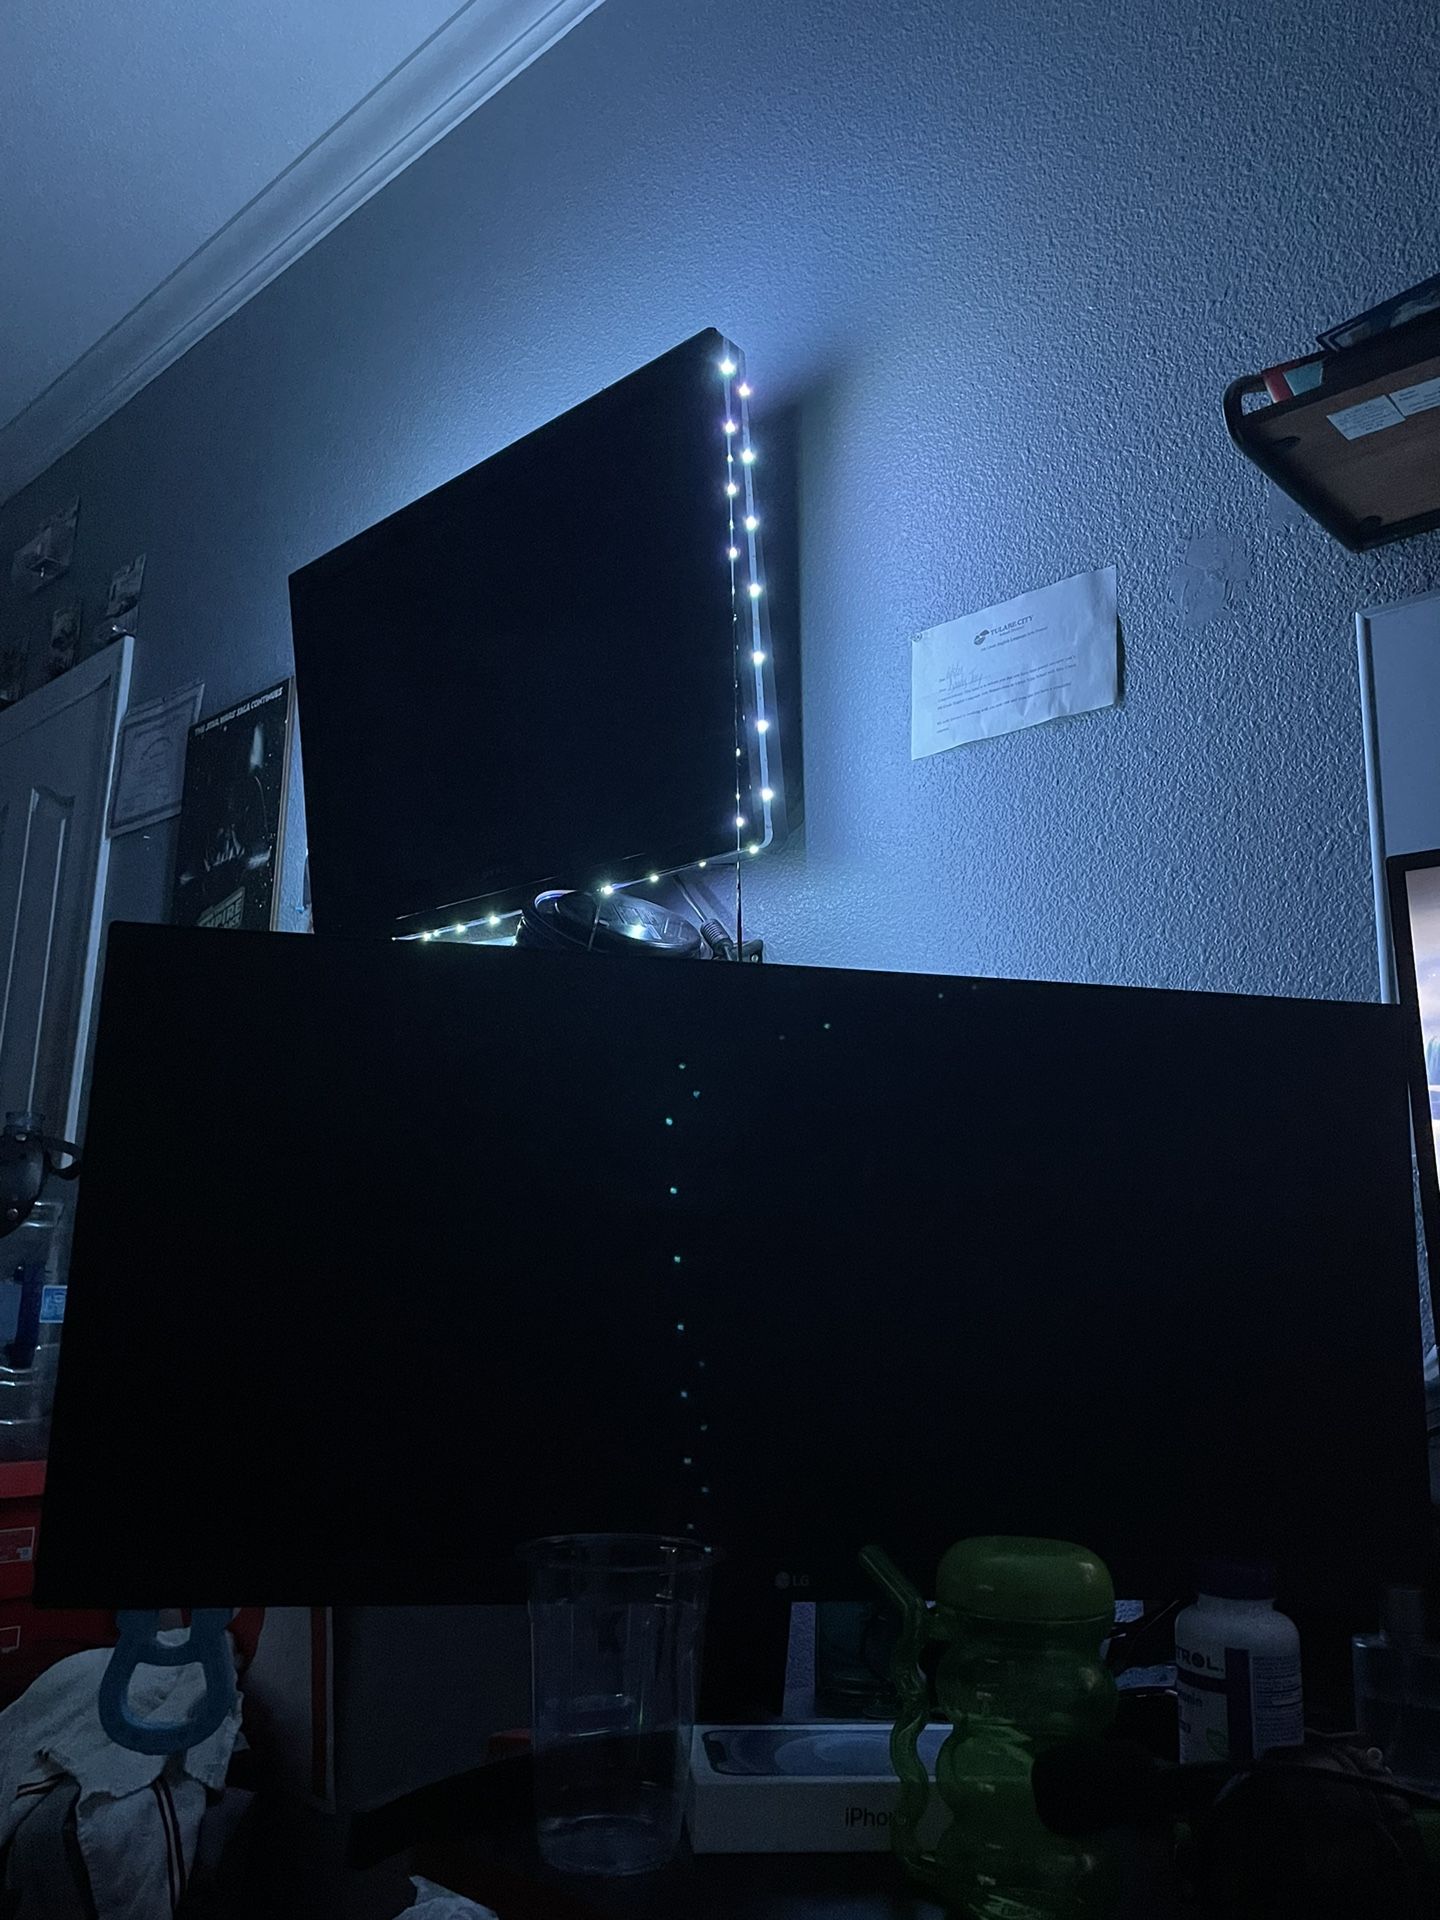 LG 27.5 inch monitor